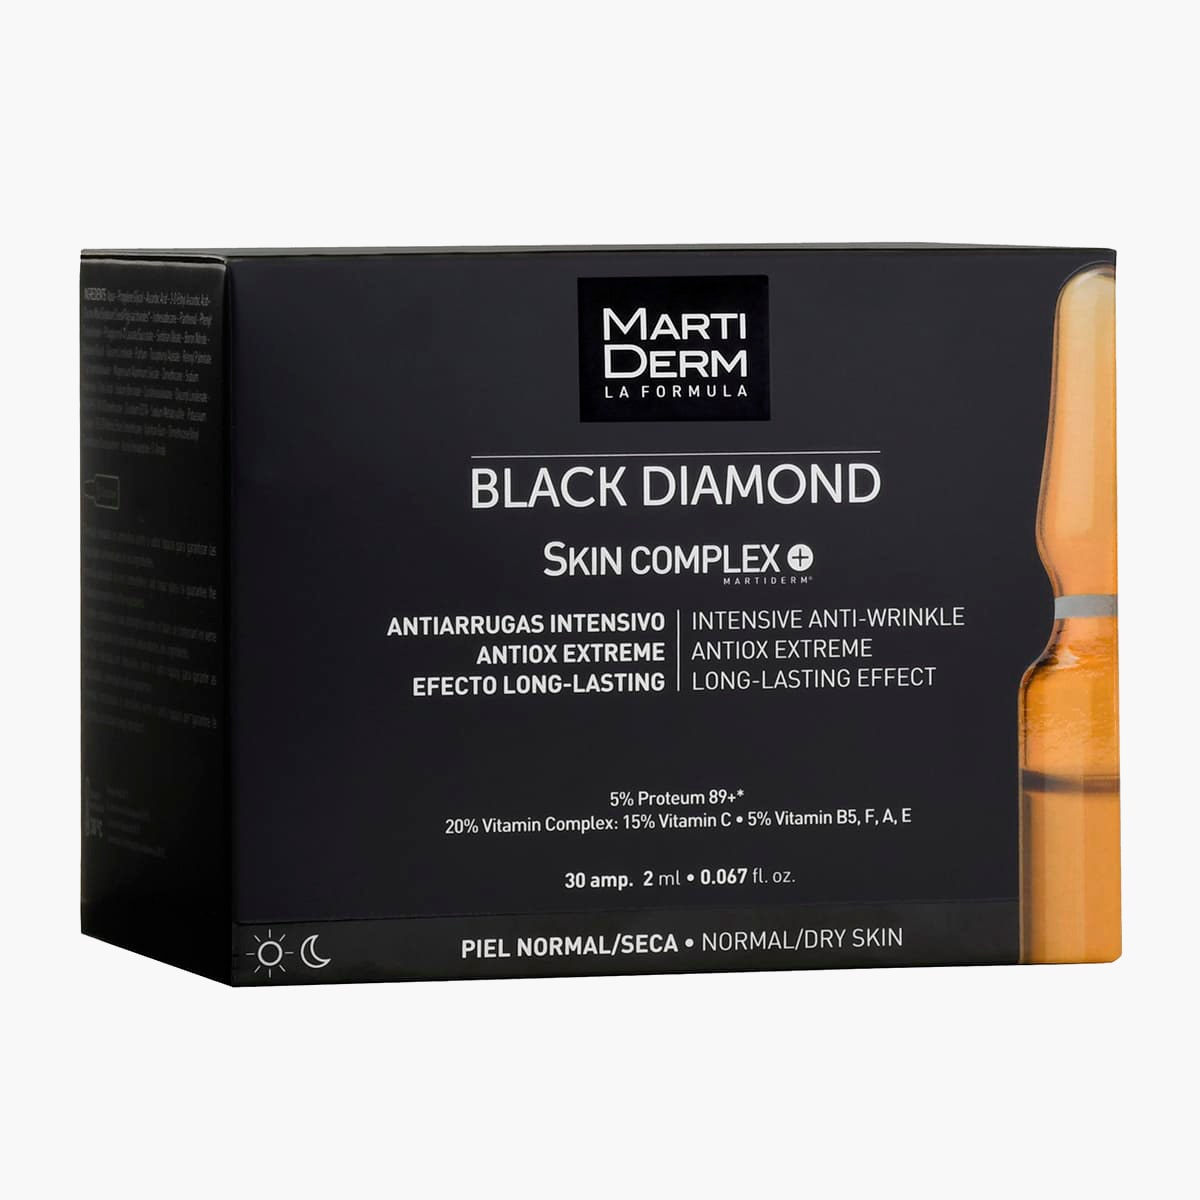 Сыворотка для лица Black Diamond Skin Complex Martiderm 5499 рублей